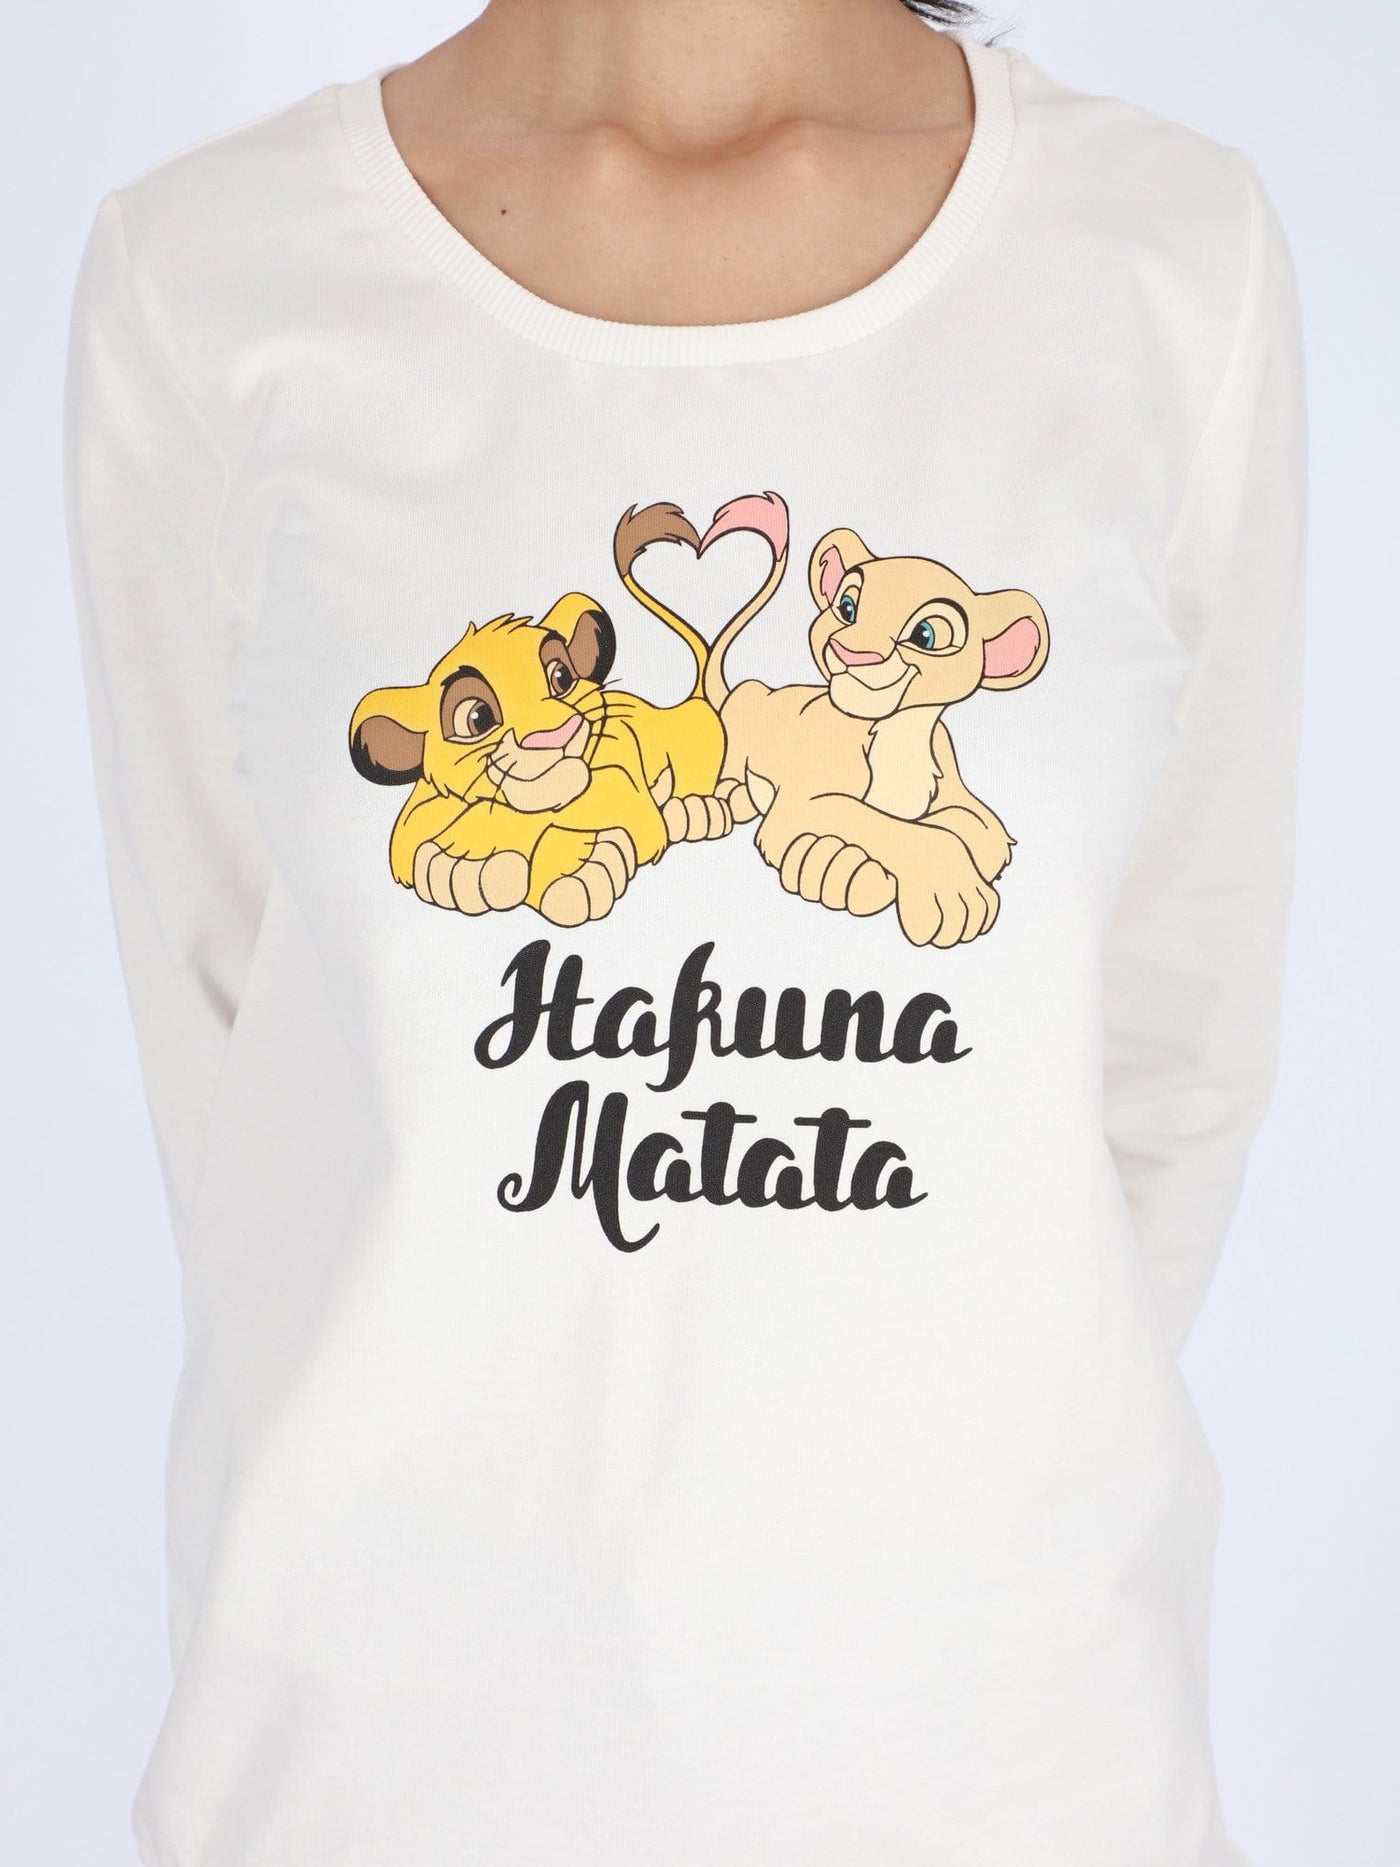 OR Tops & Blouses OFF WHITE / S Hakuna Matata Long Sleeve T-shirt